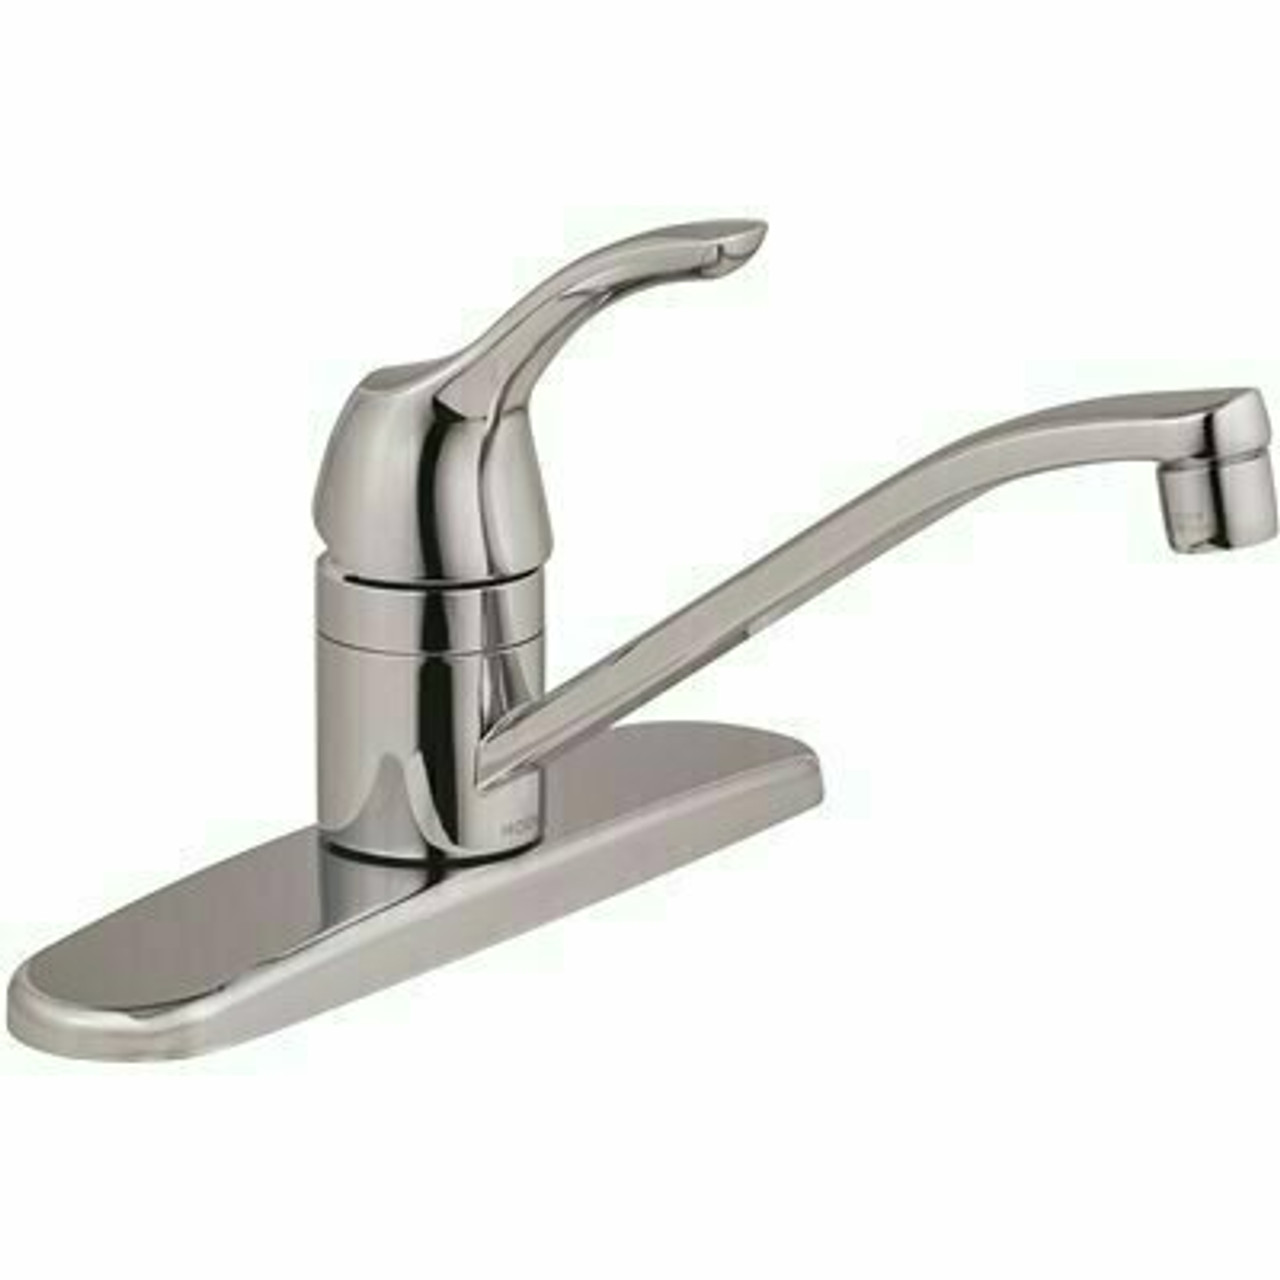 Moen Adler Single-Handle Low Arc Standard Kitchen Faucet In Chrome - 202998672